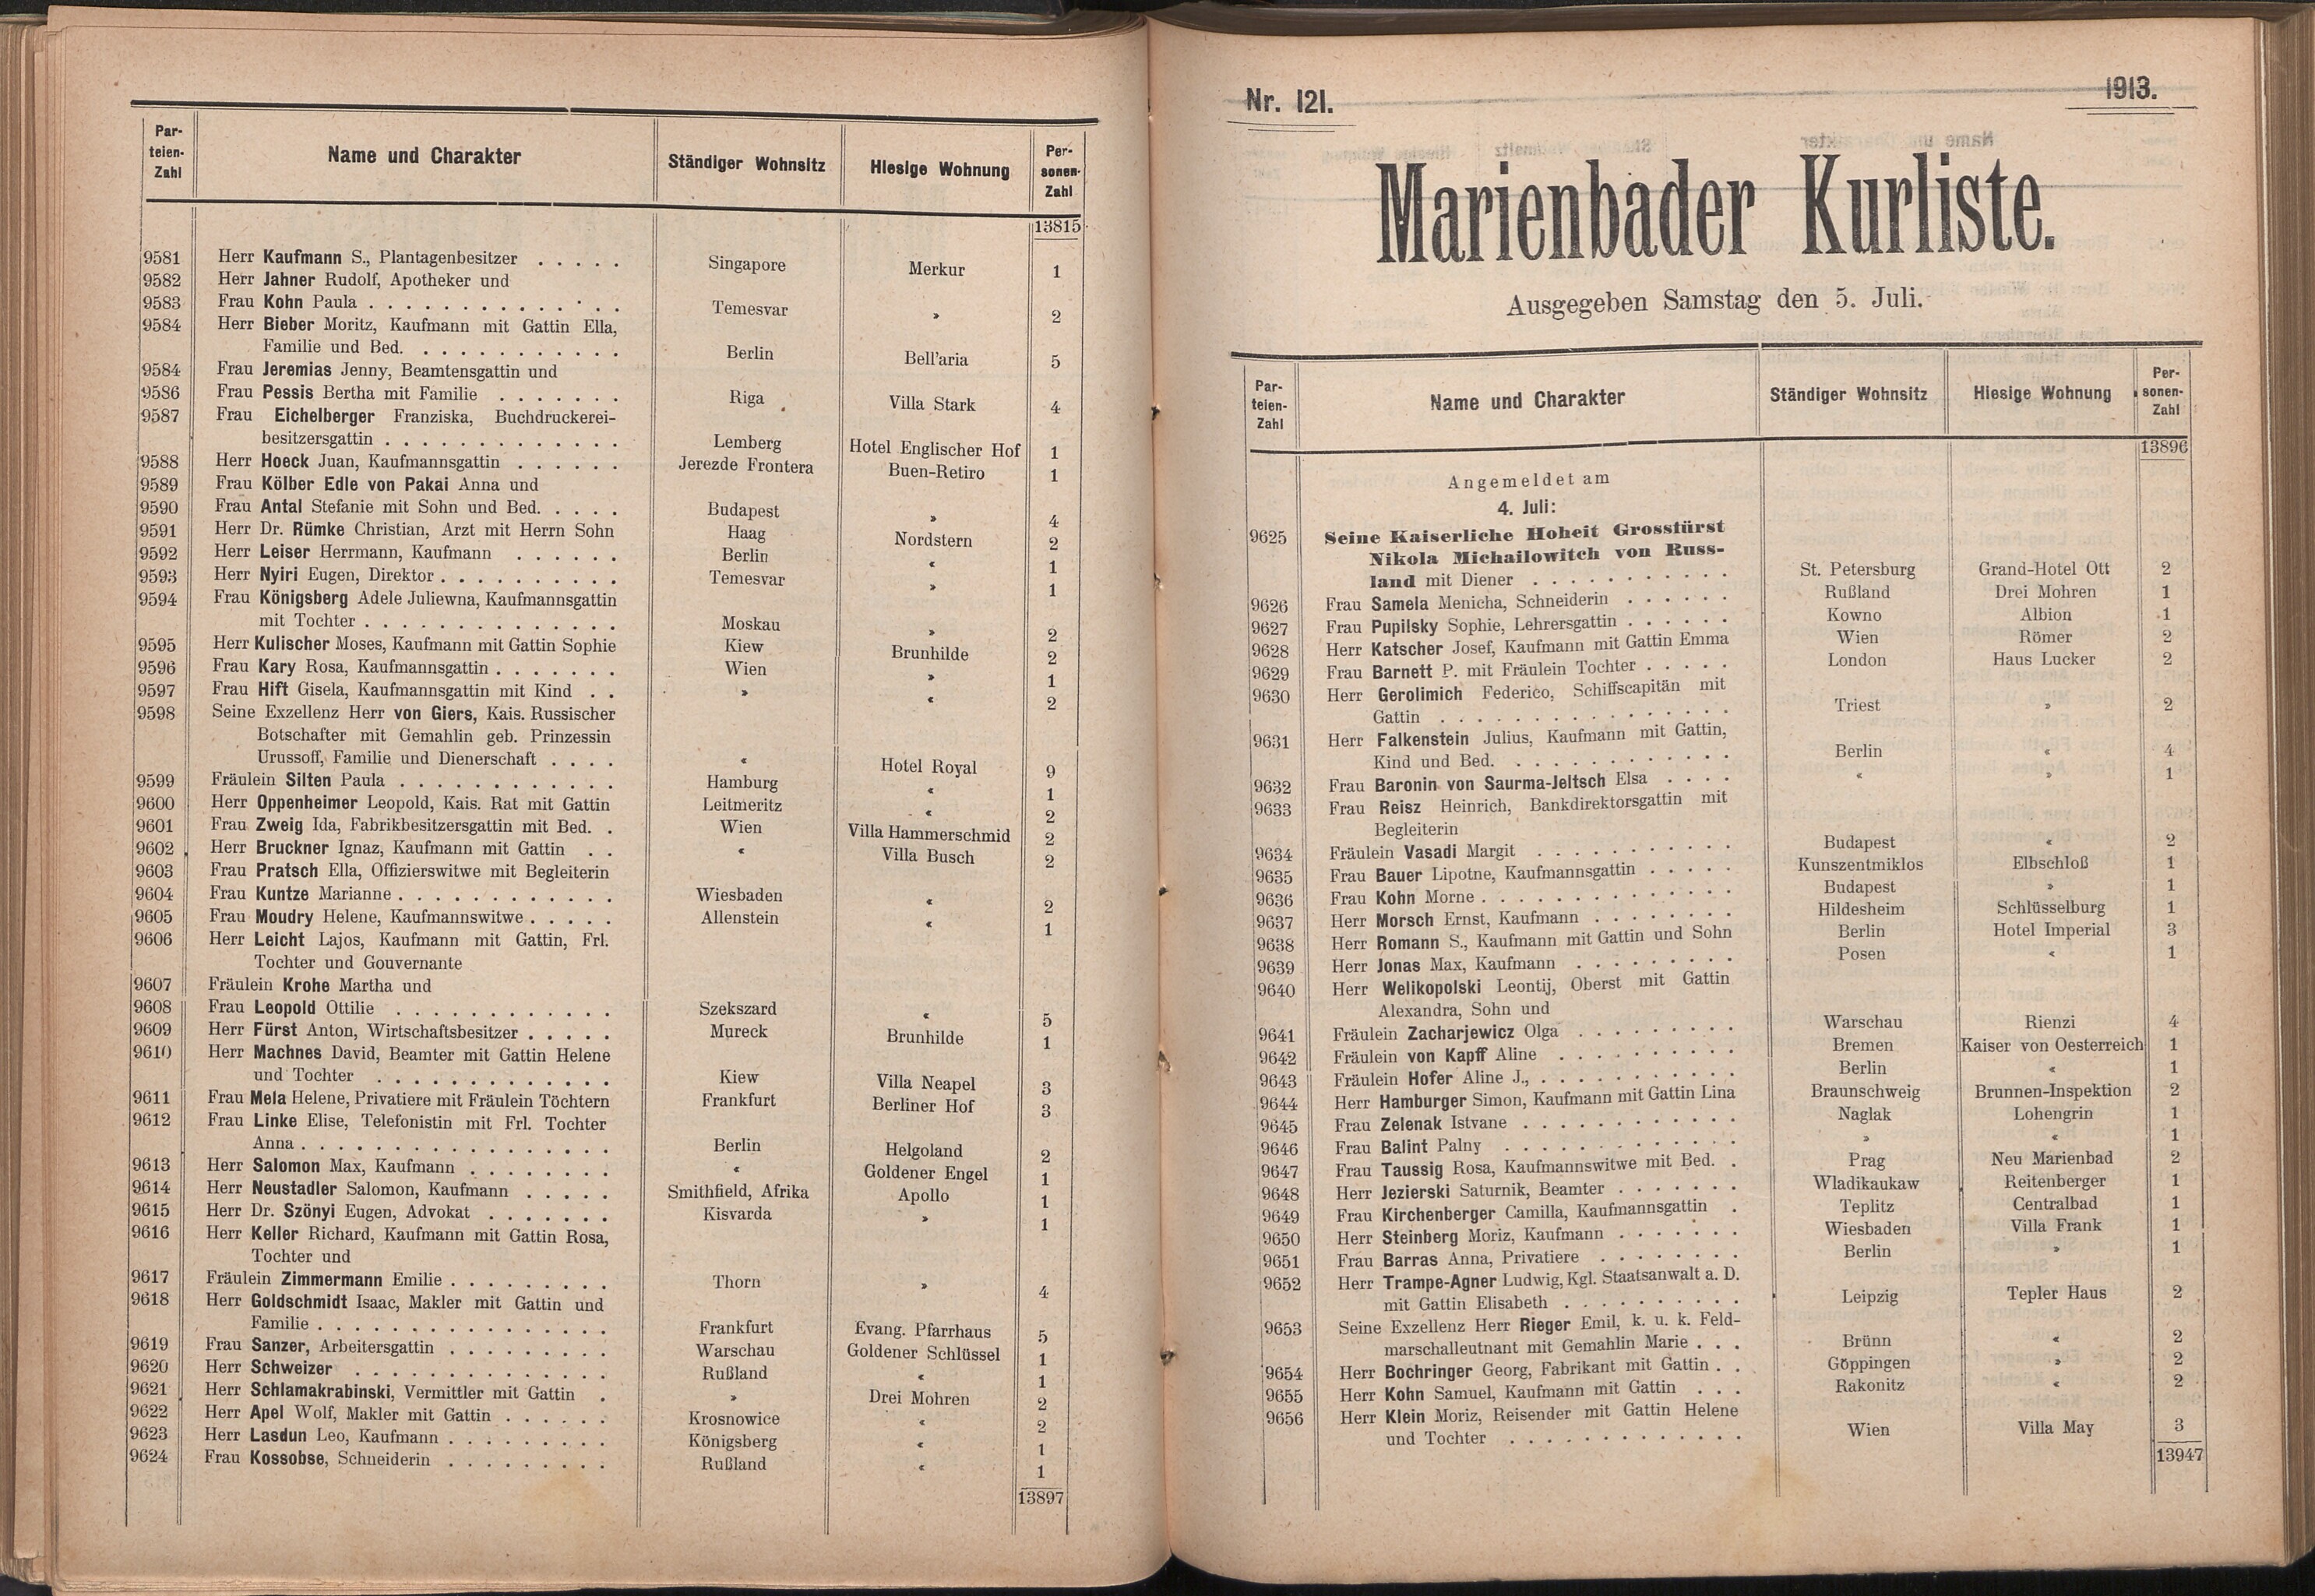 138. soap-ch_knihovna_marienbader-kurliste-1913_1380